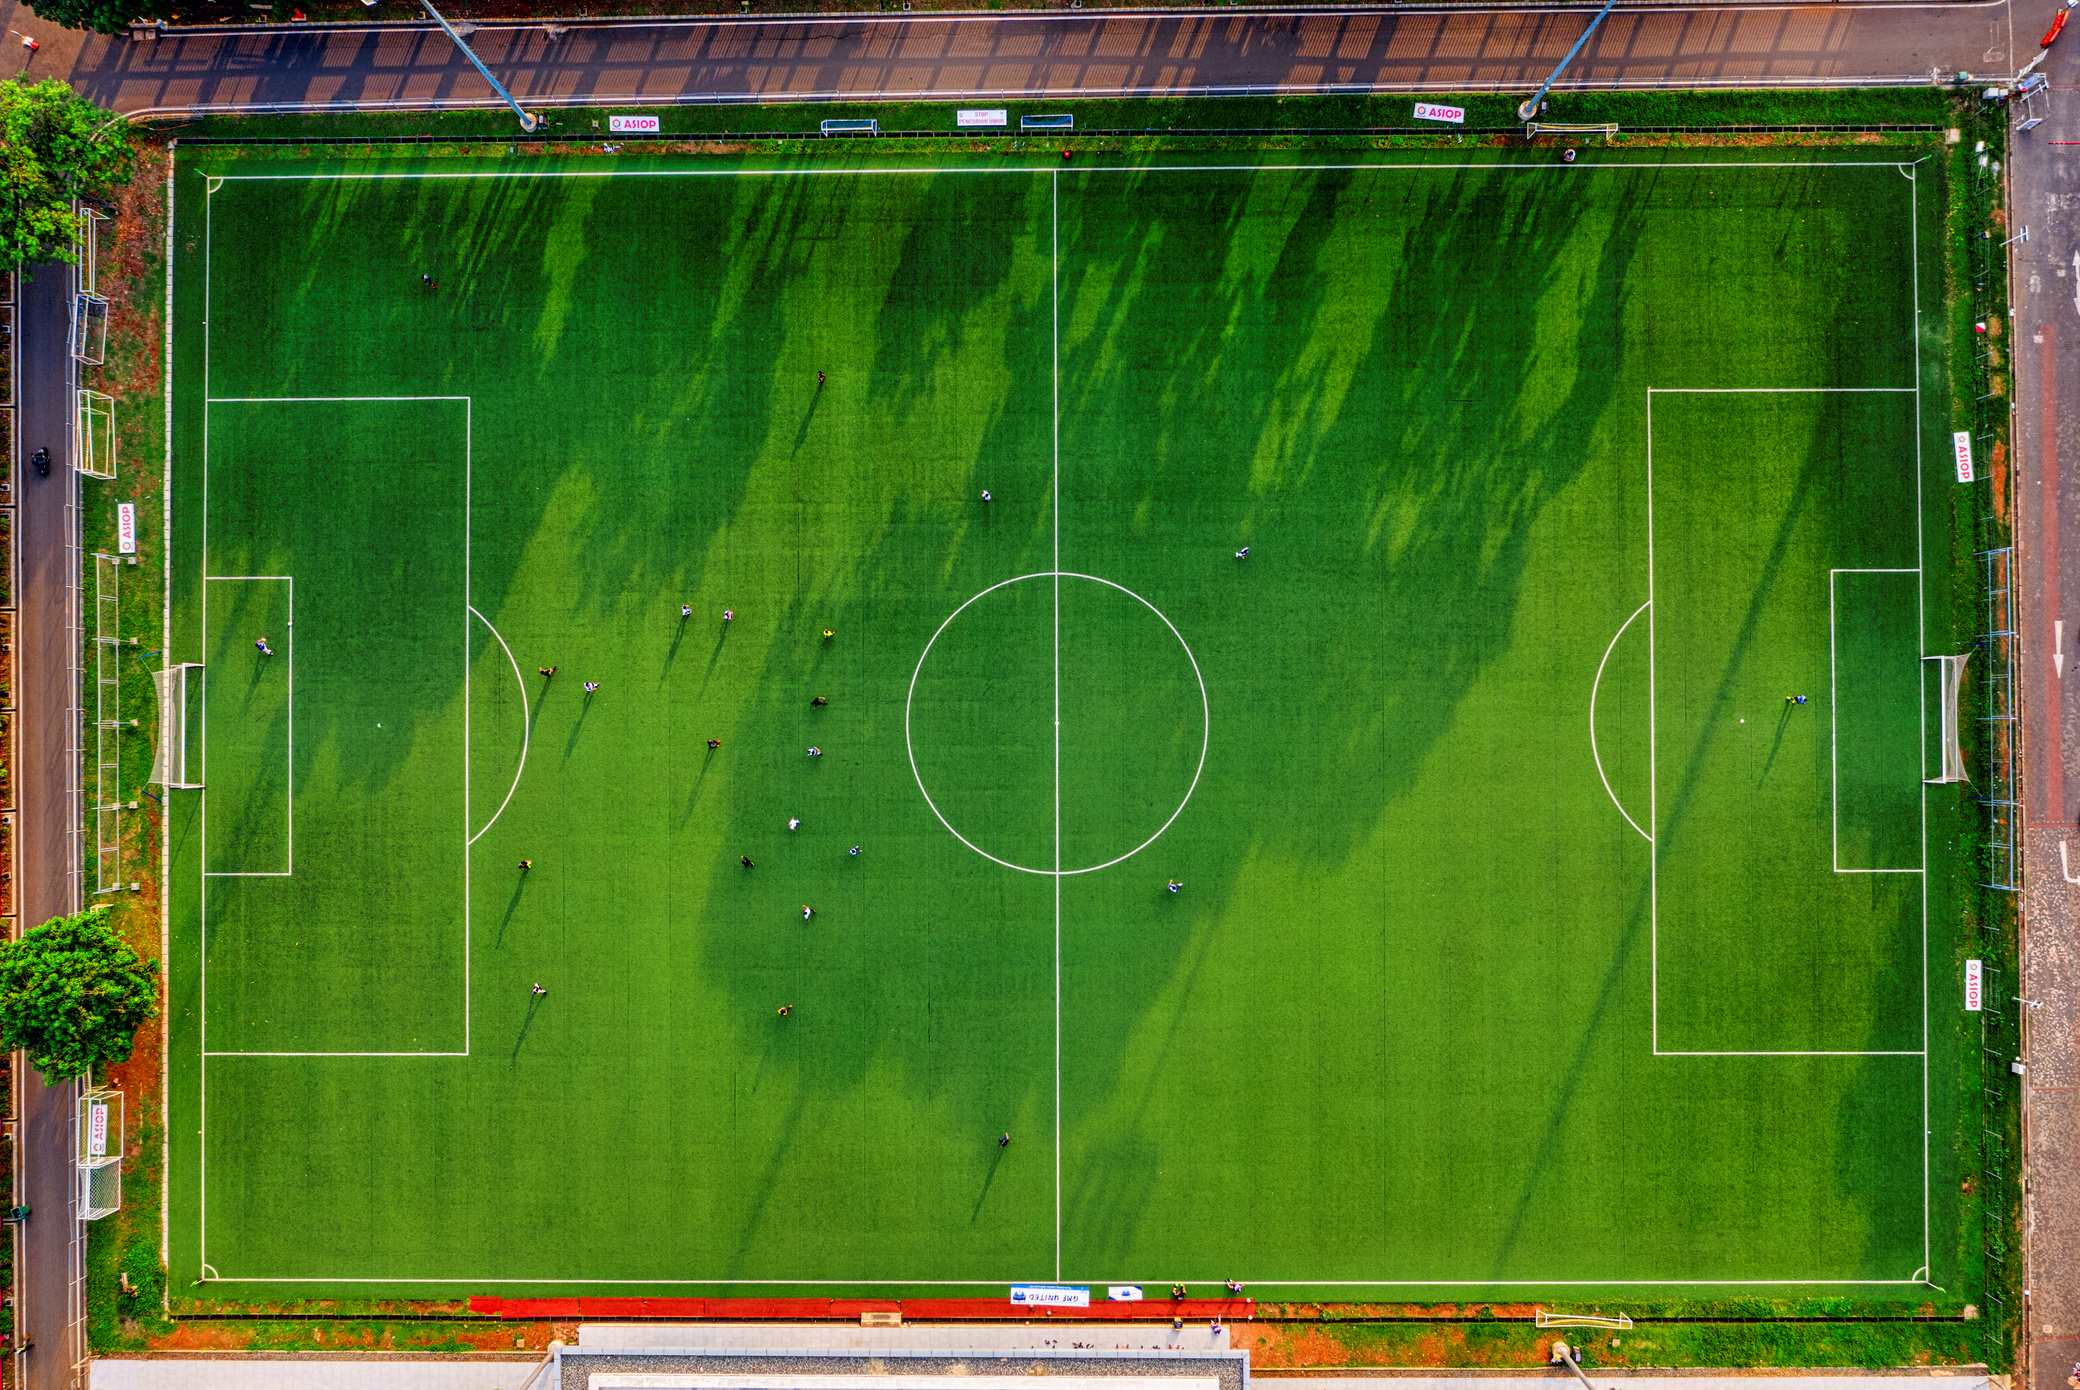 Bird's Eye View Of A Soccer Field